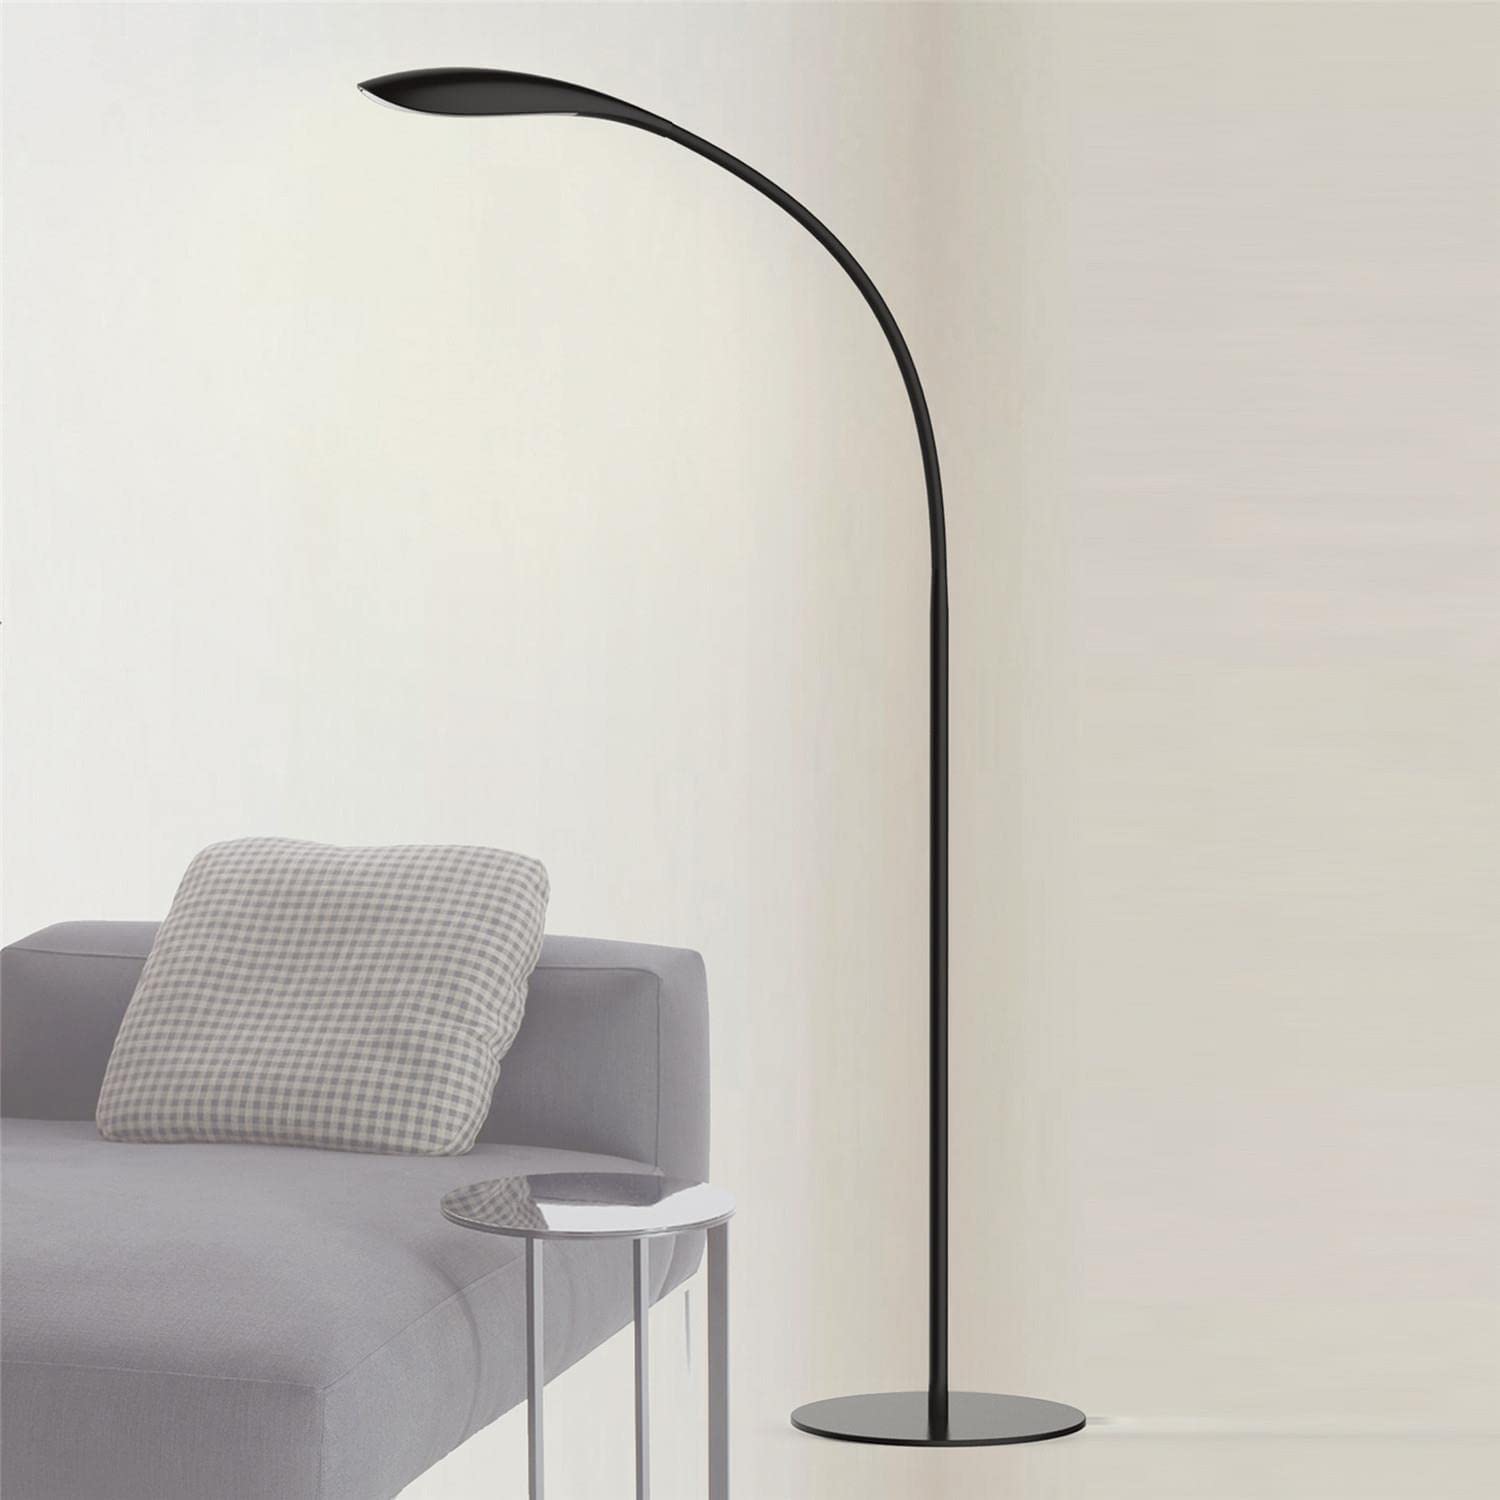 Sunbesta Luxurious Haven LED Floor Lamp for Living Room, Study Room & Bedroom - 58.3", Black